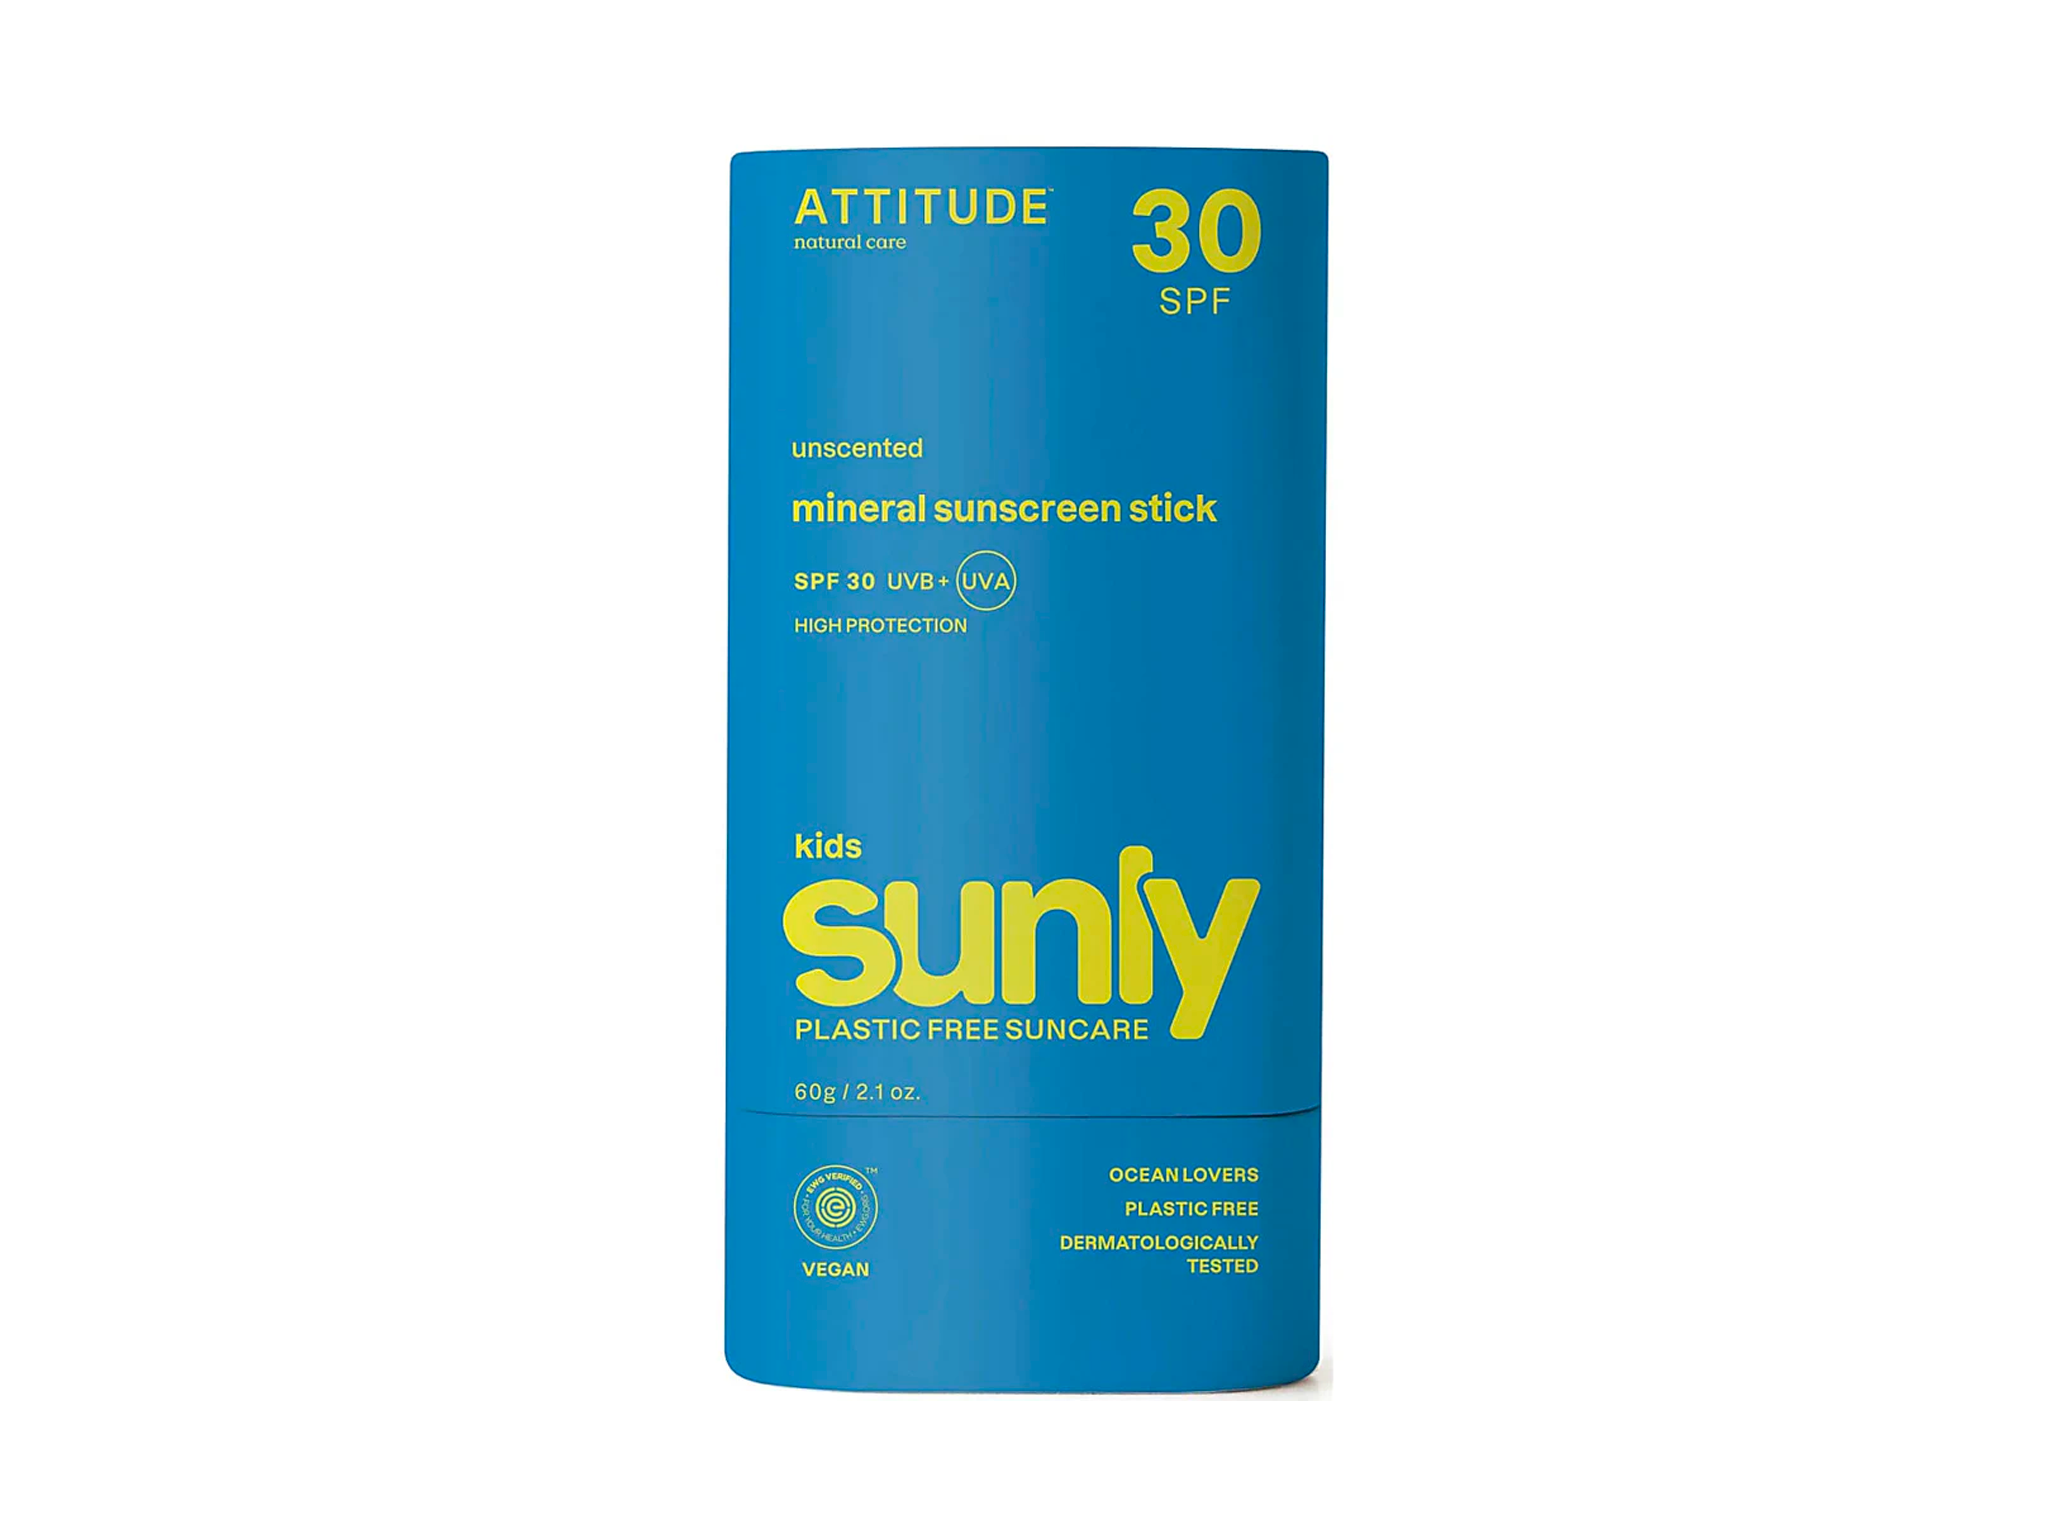 Sunly-suncream-indybest